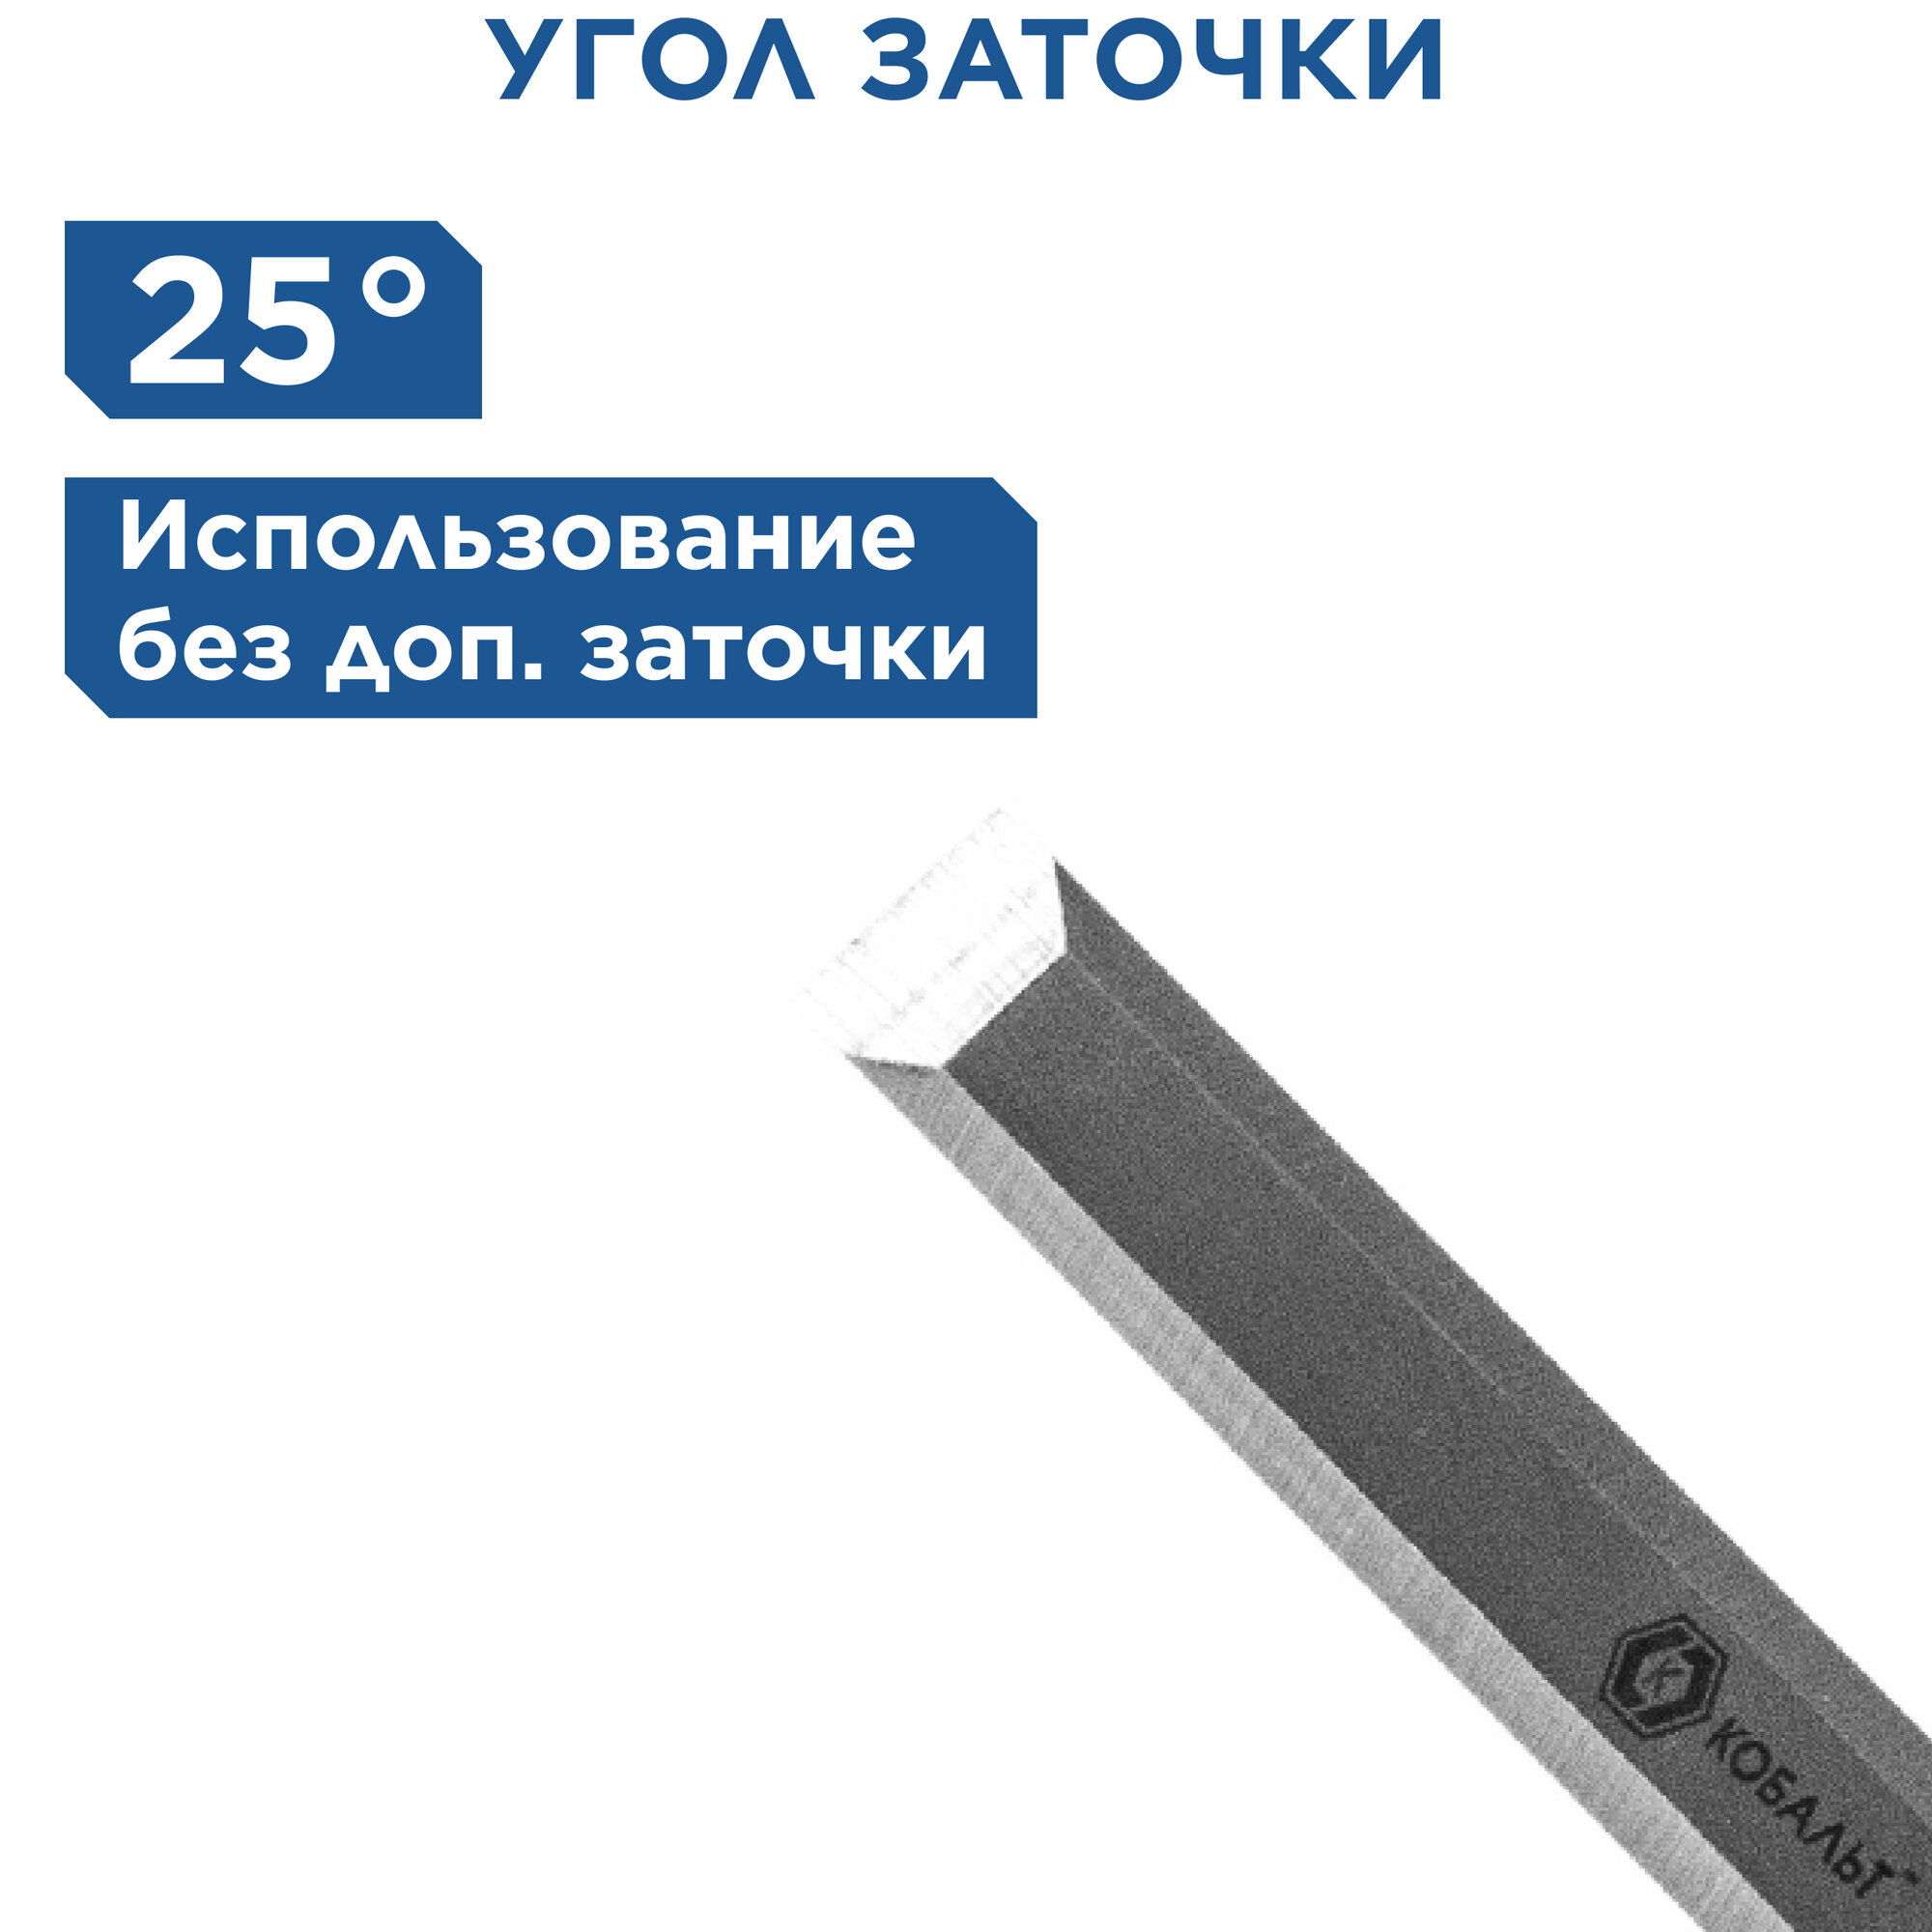 Стамеска плоская кобальт 10 х 140 мм, CR-V, двухкомпонентная рукоятка (1 шт.) блистер (245-527)